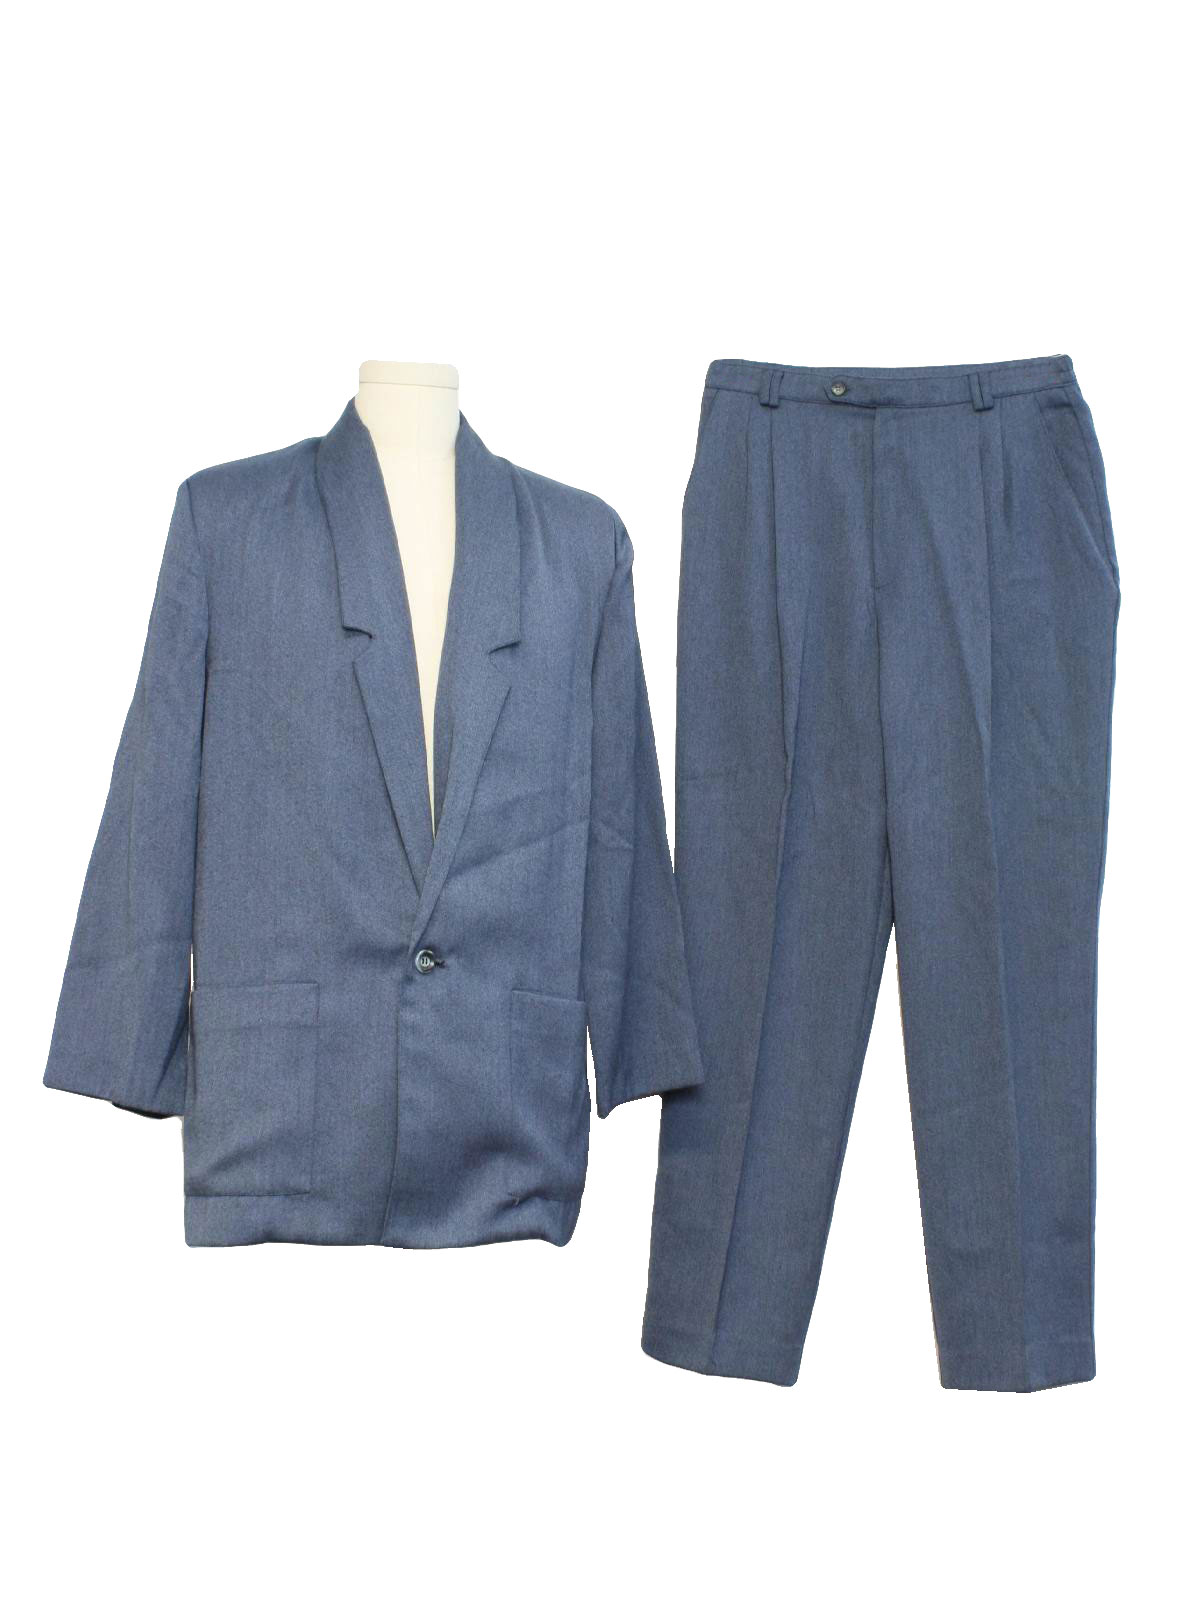 1980's Retro Suit: 80s -No Label- Mens two piece totally 80s club suit ...